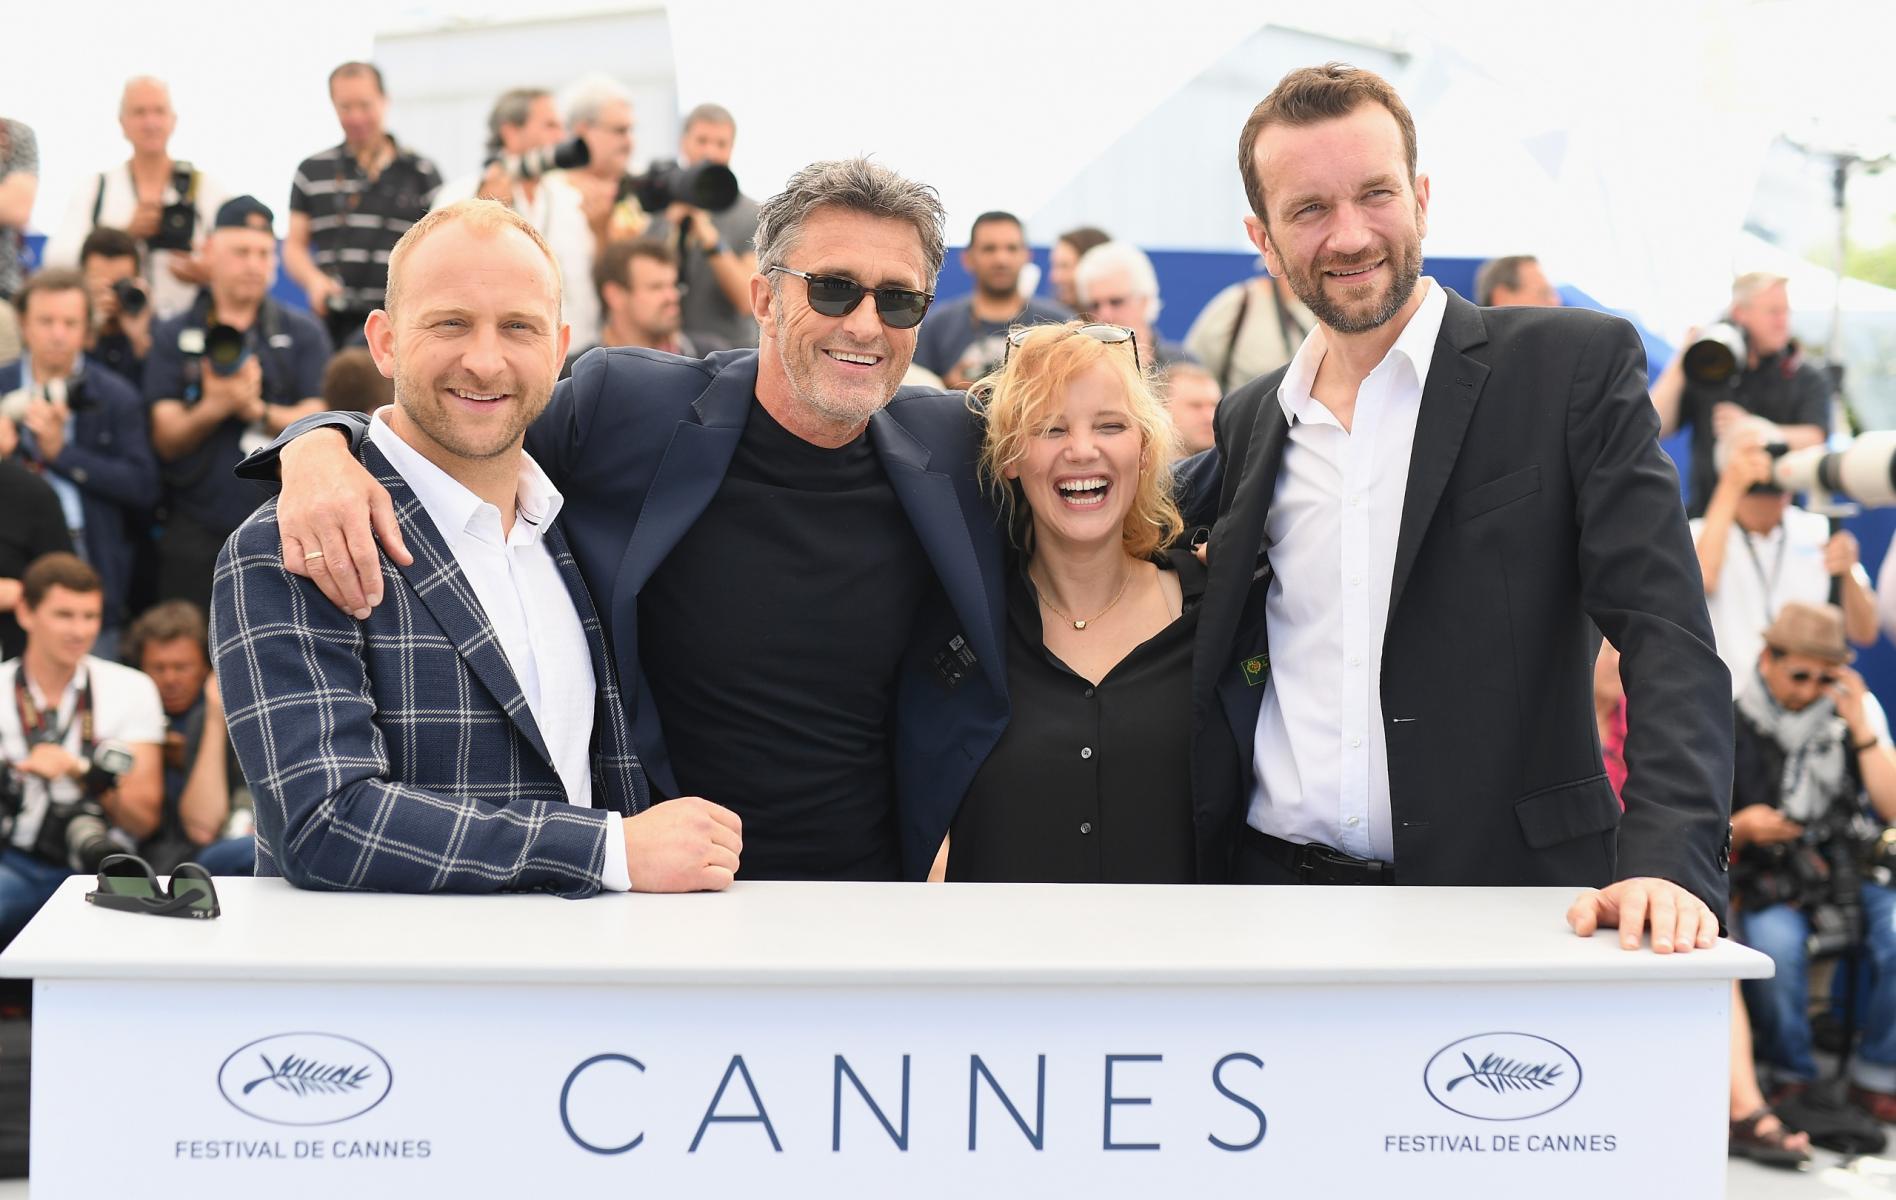 Borys Szyc, Pawel Pawlikowski, Joanna Kulig & Tomasz Kot en Cannes 2018